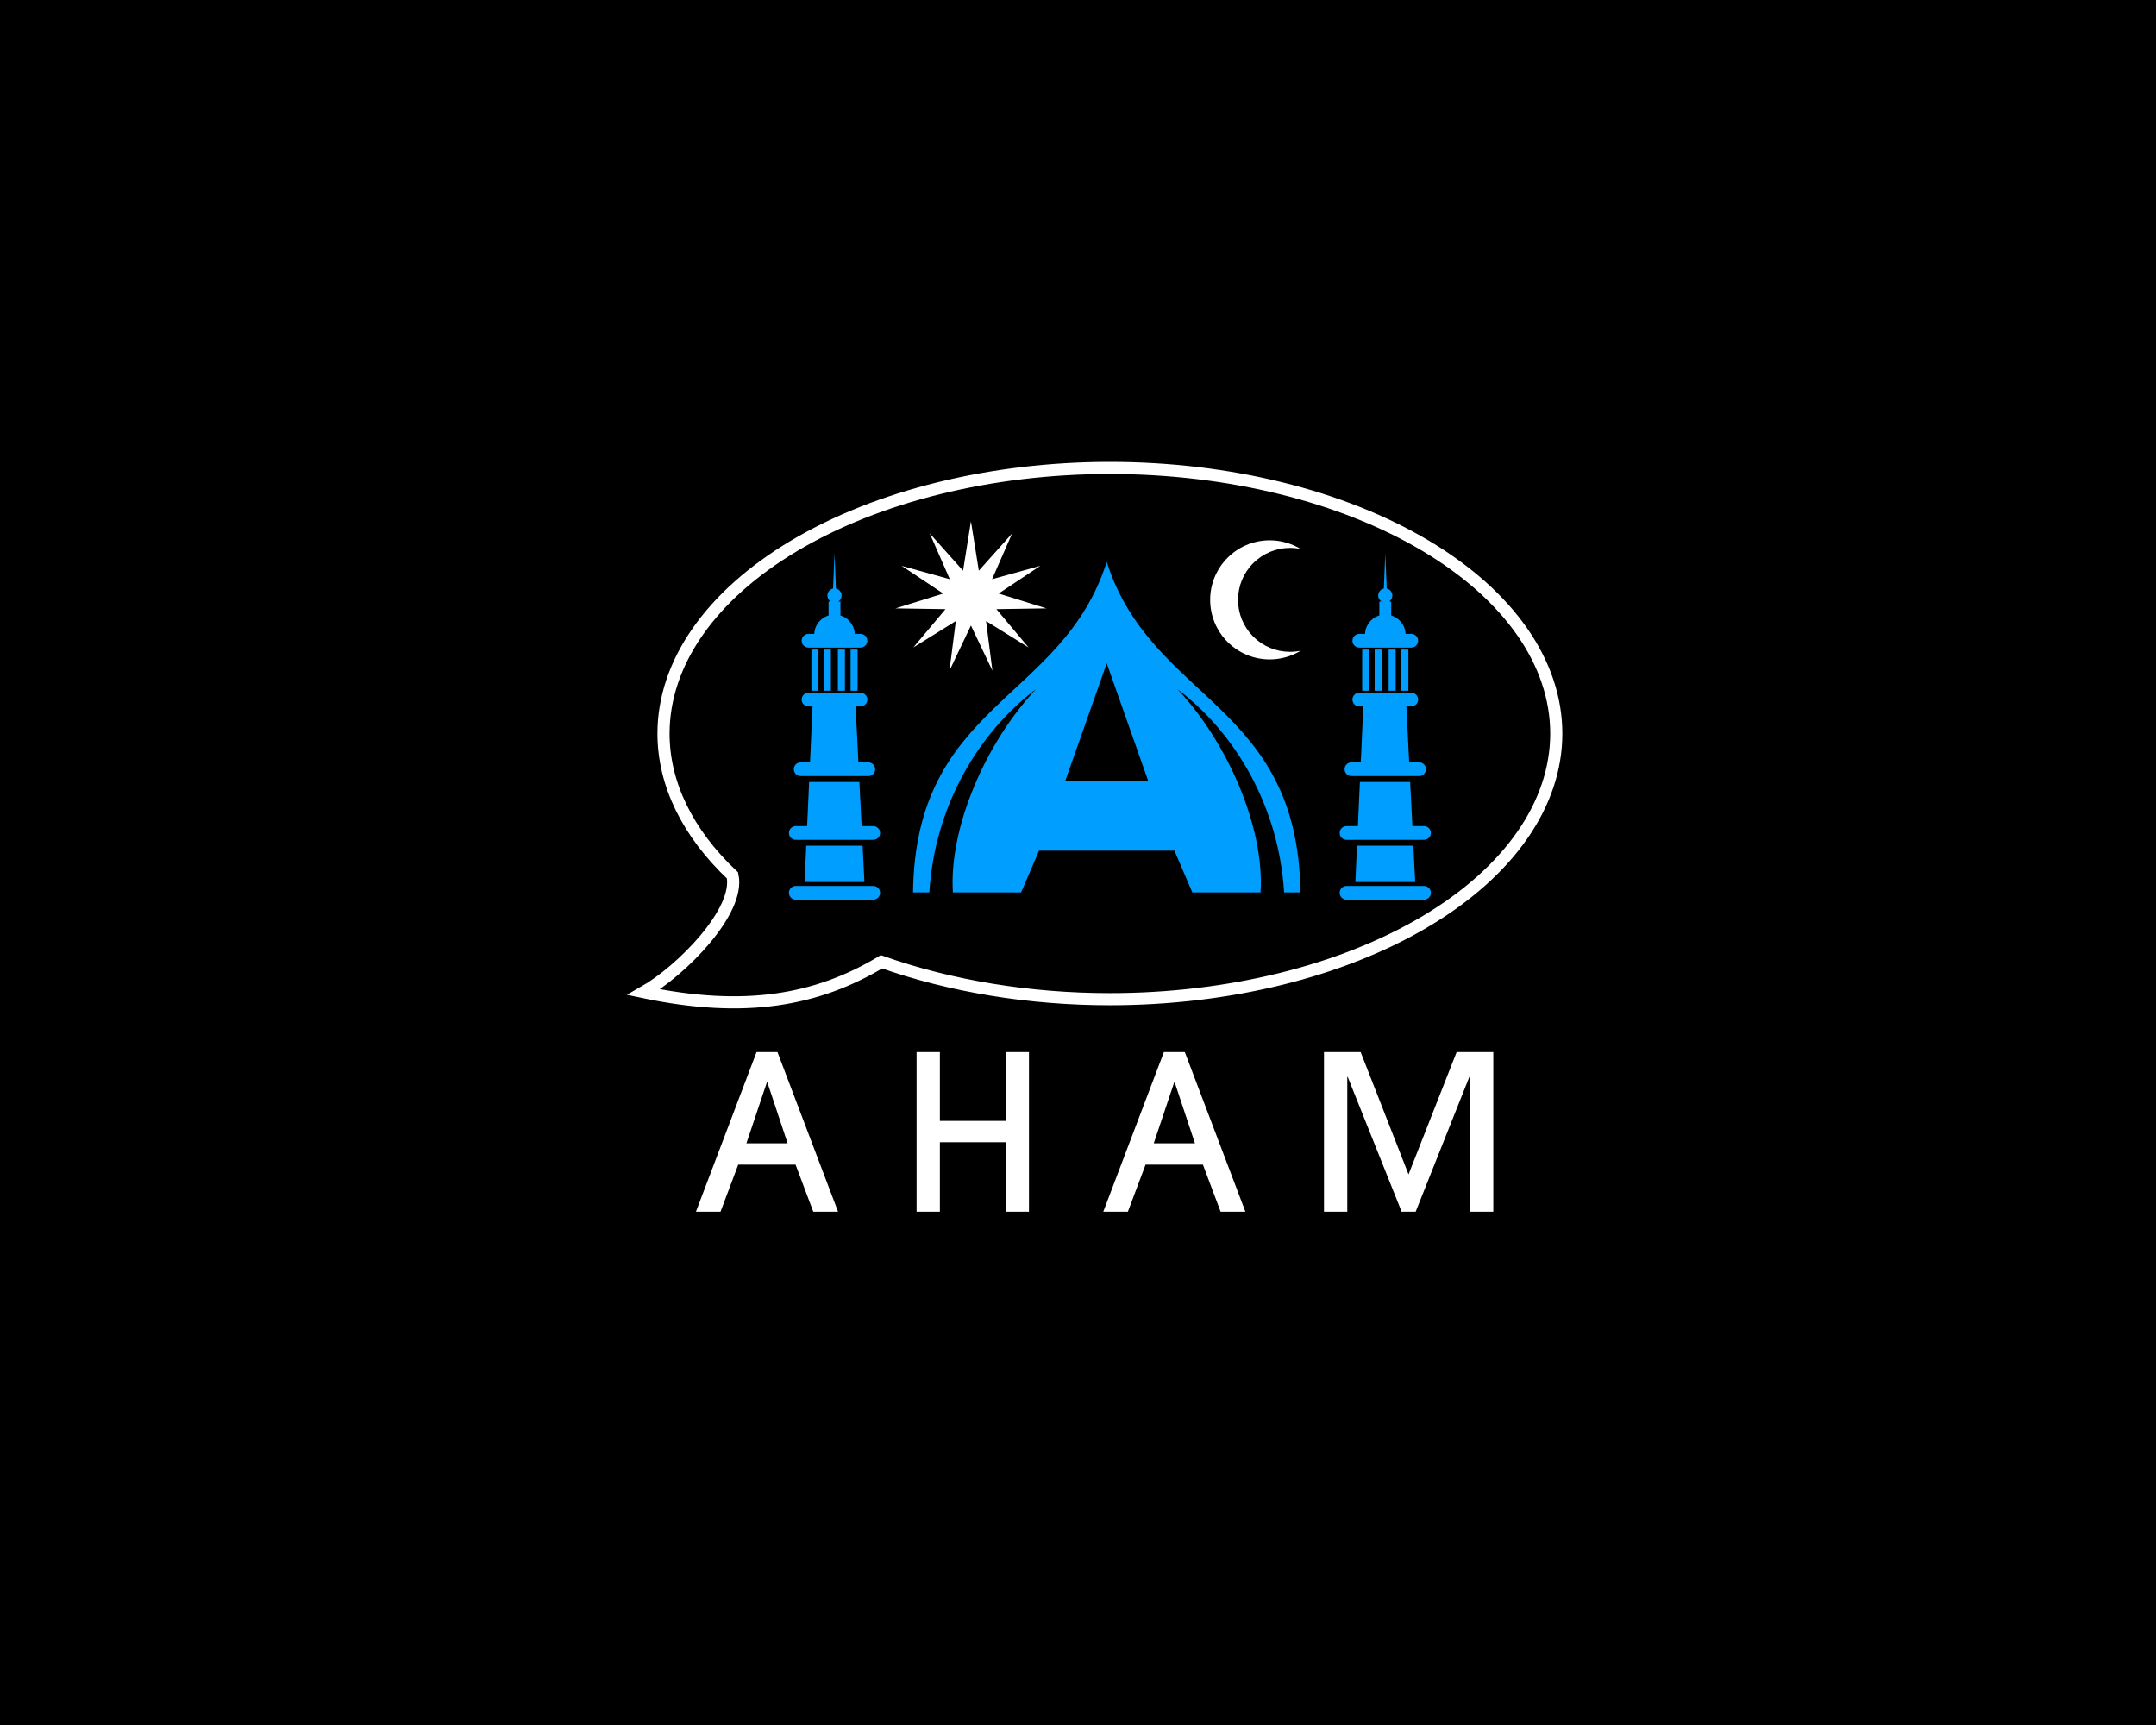 Logo Design Contest for Aham | Hatchwise